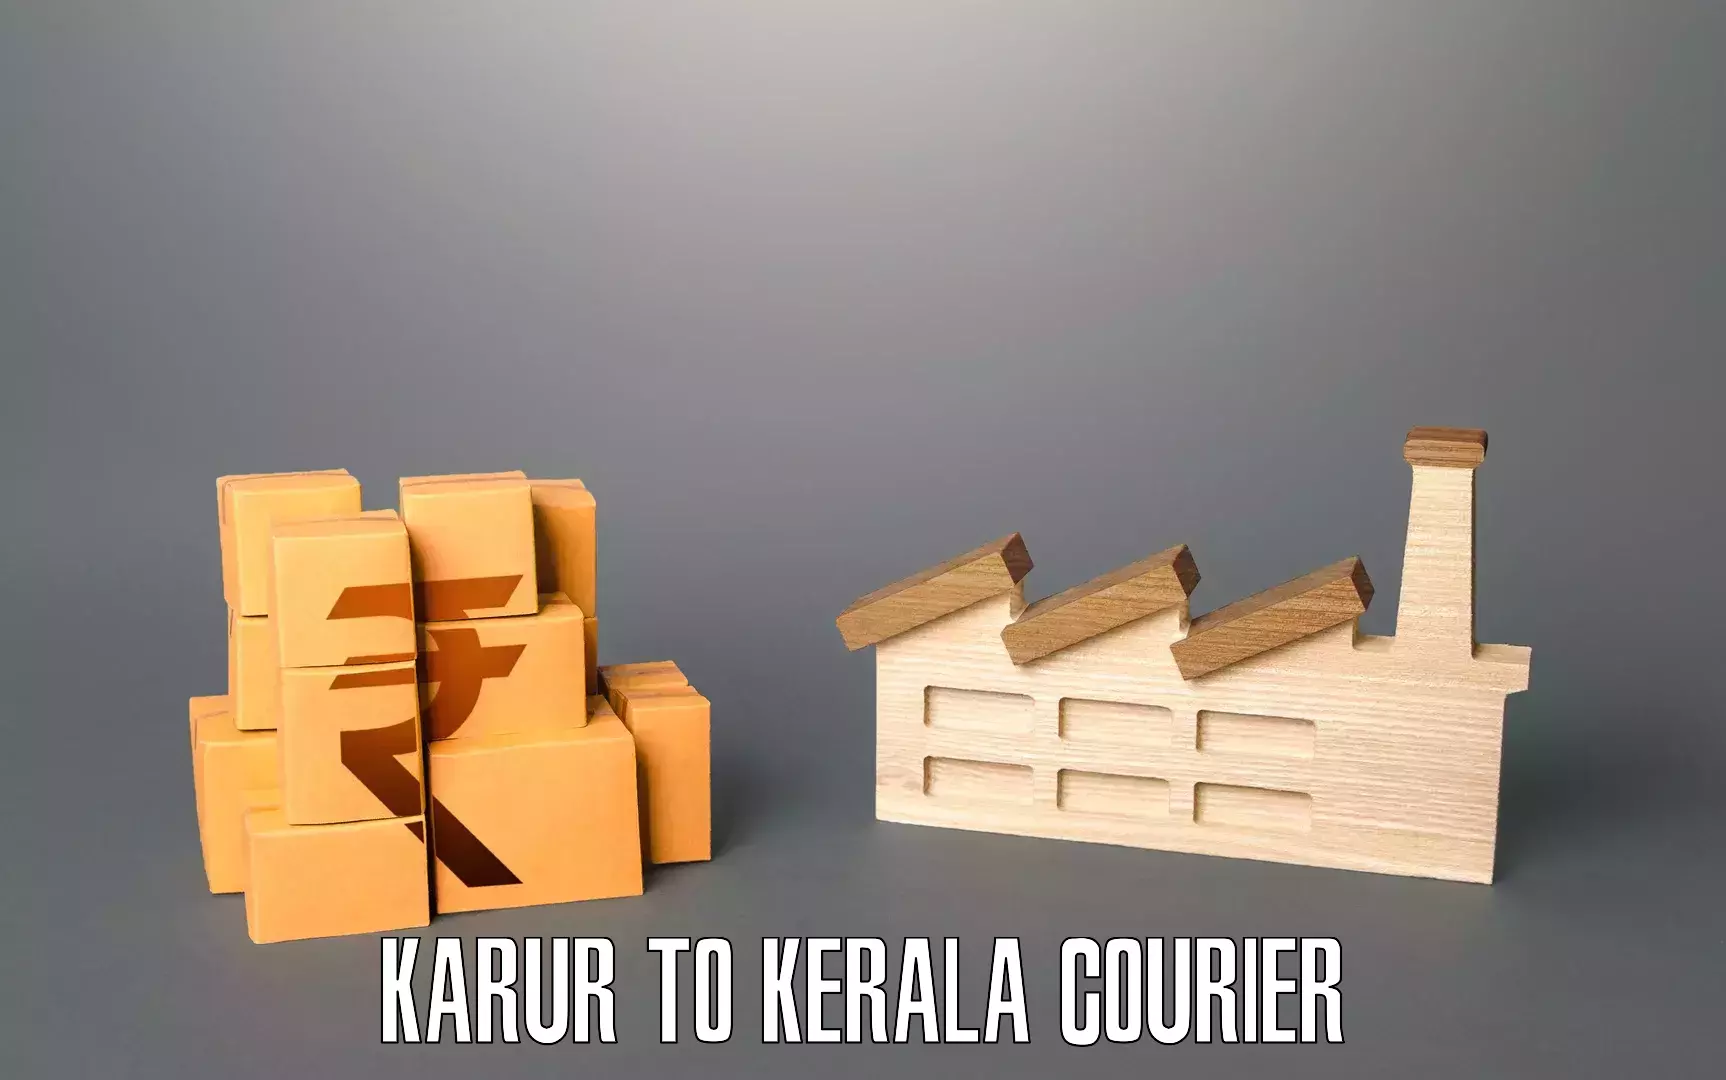 Furniture delivery service Karur to Kerala